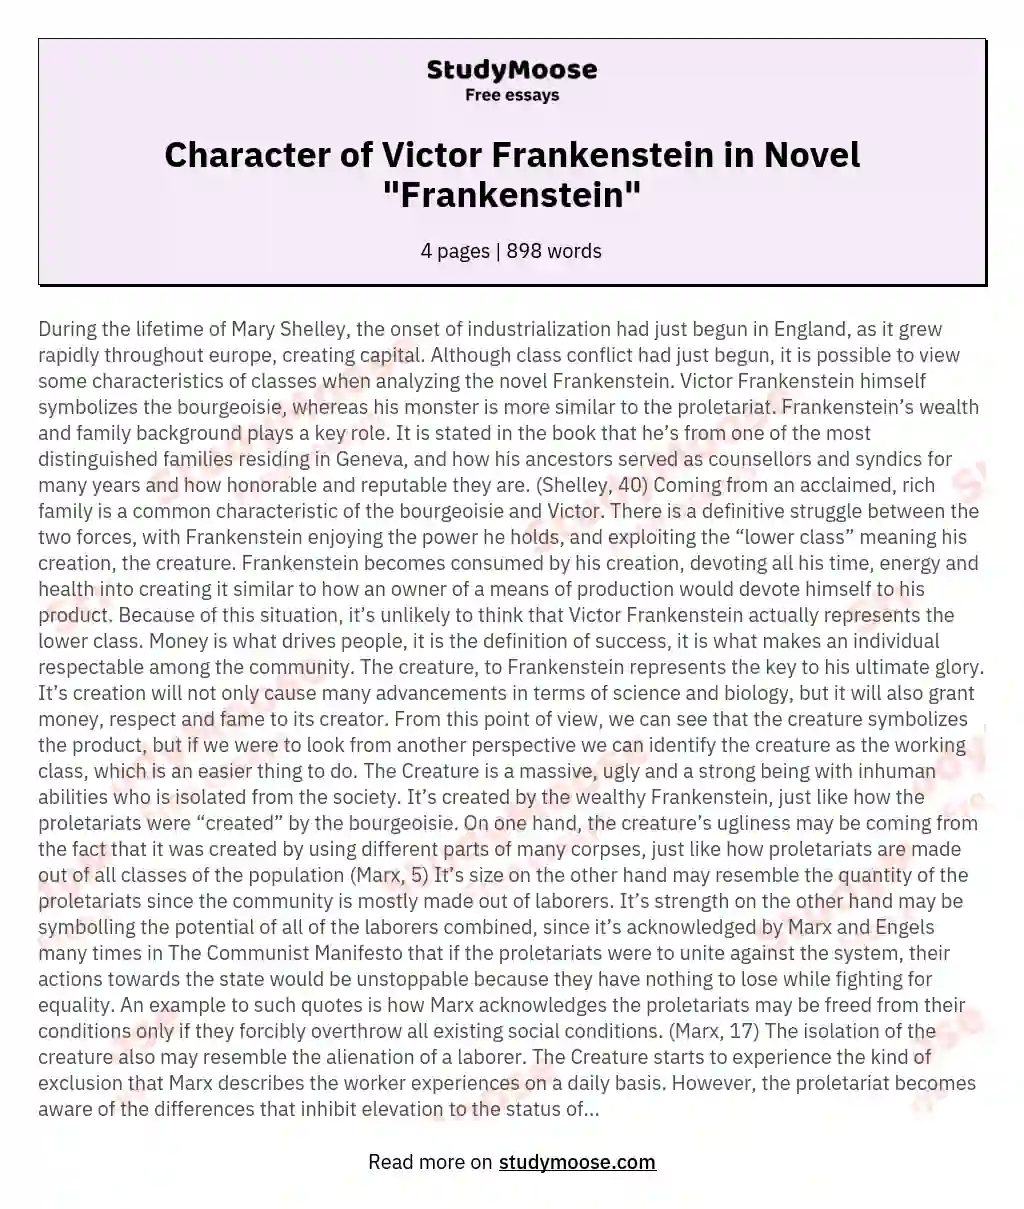 Character of Victor Frankenstein in Novel "Frankenstein"